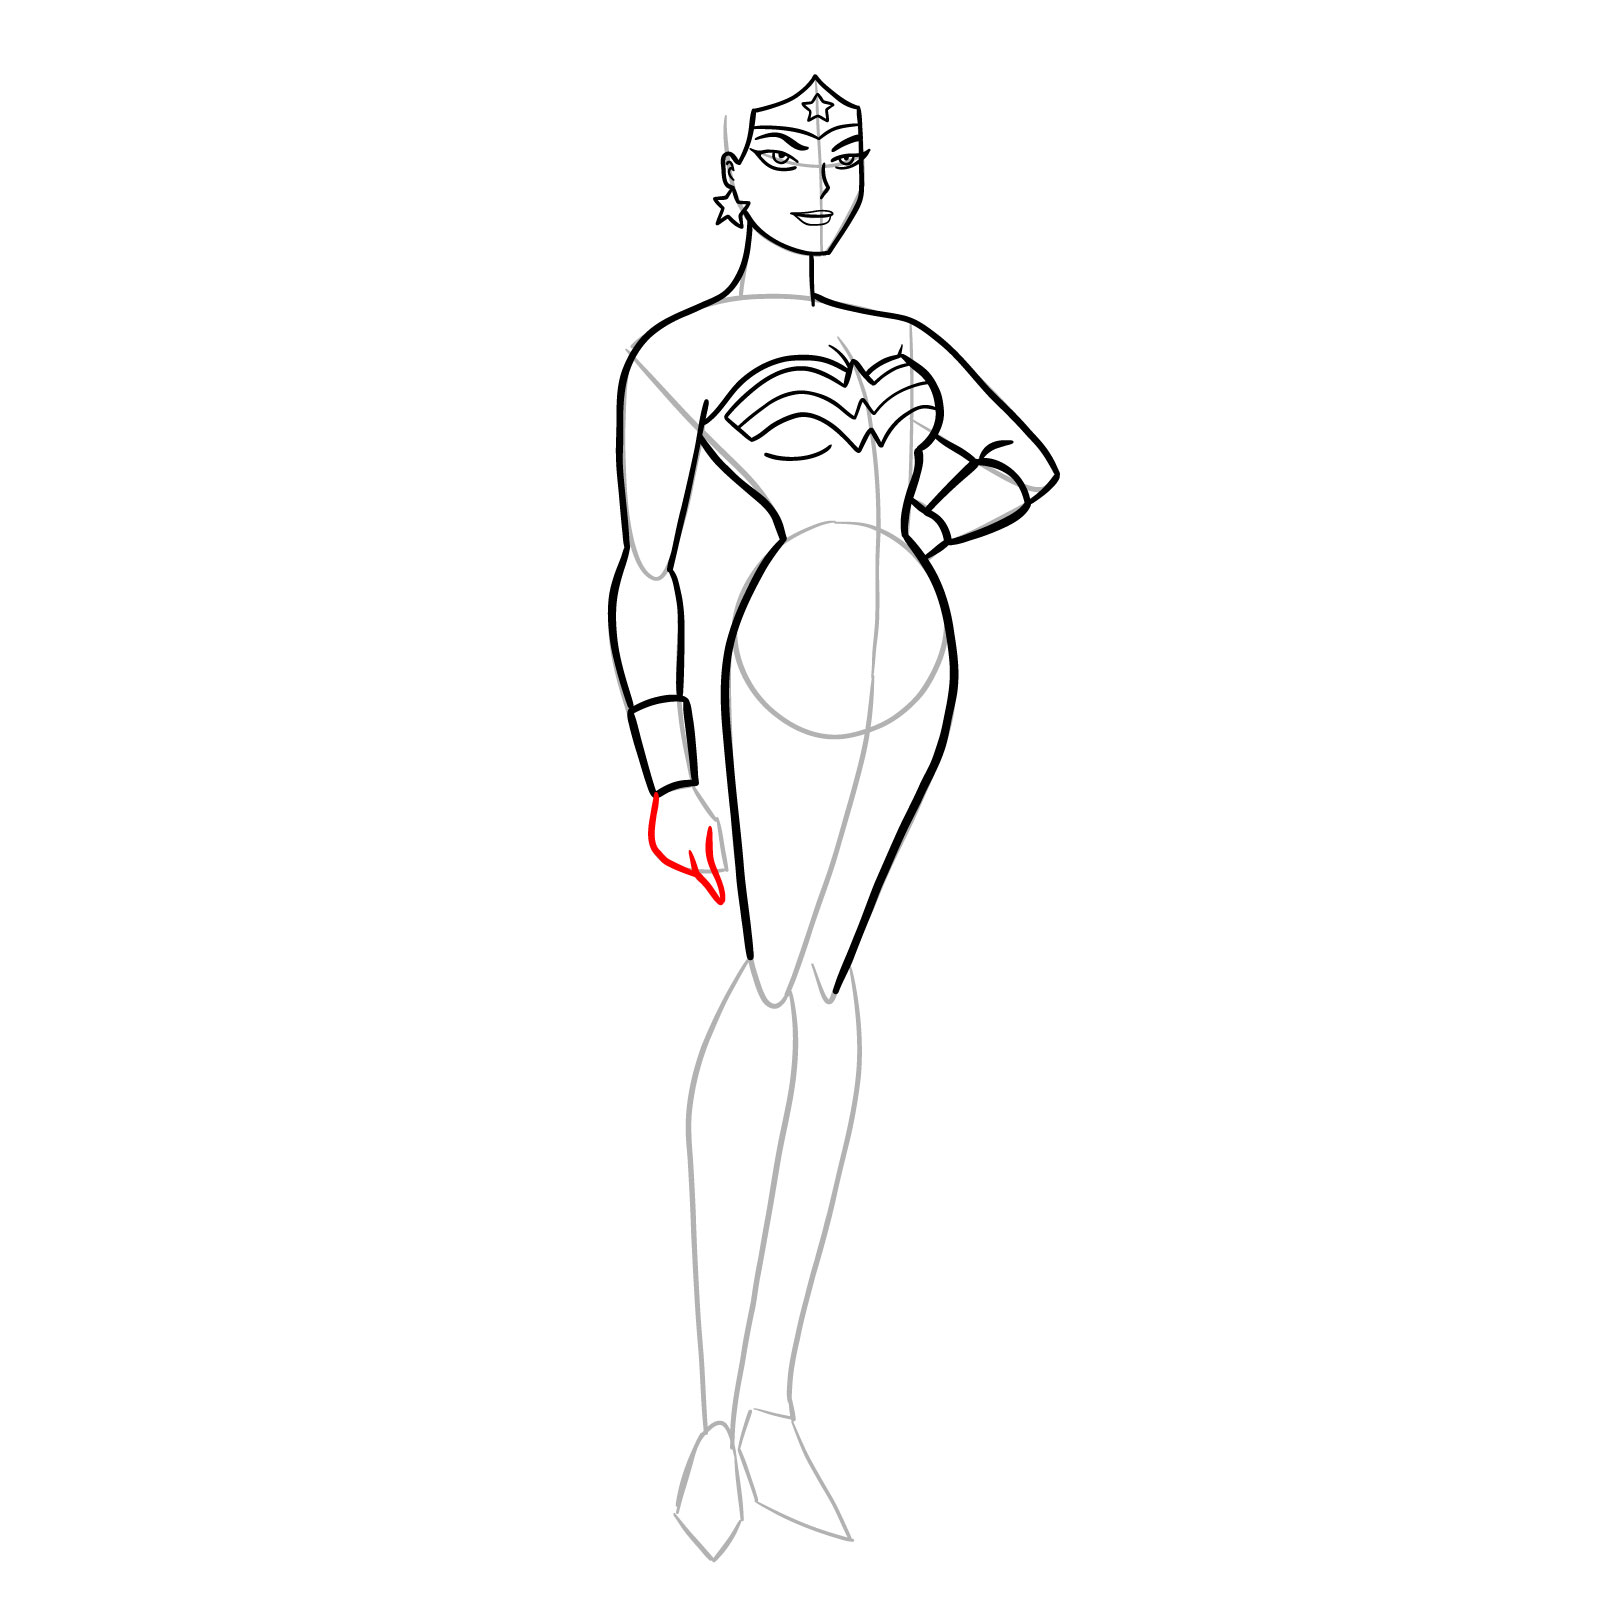 How to draw Wonder Woman cartoon style - step 20